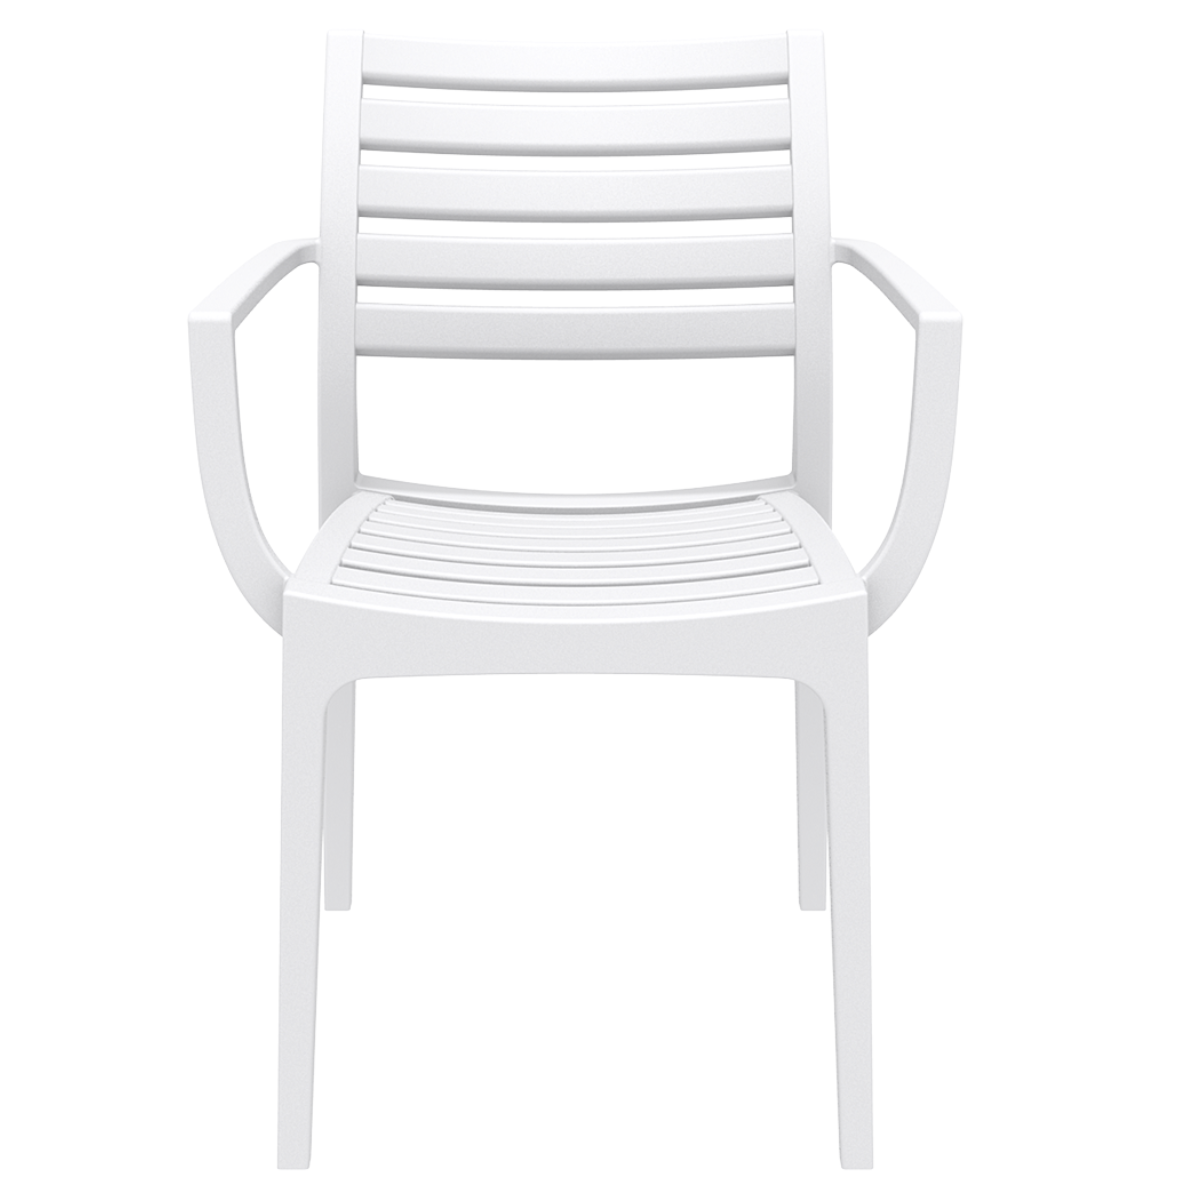 ST ARTEMIS Fehér design Műanyag kültéri szék